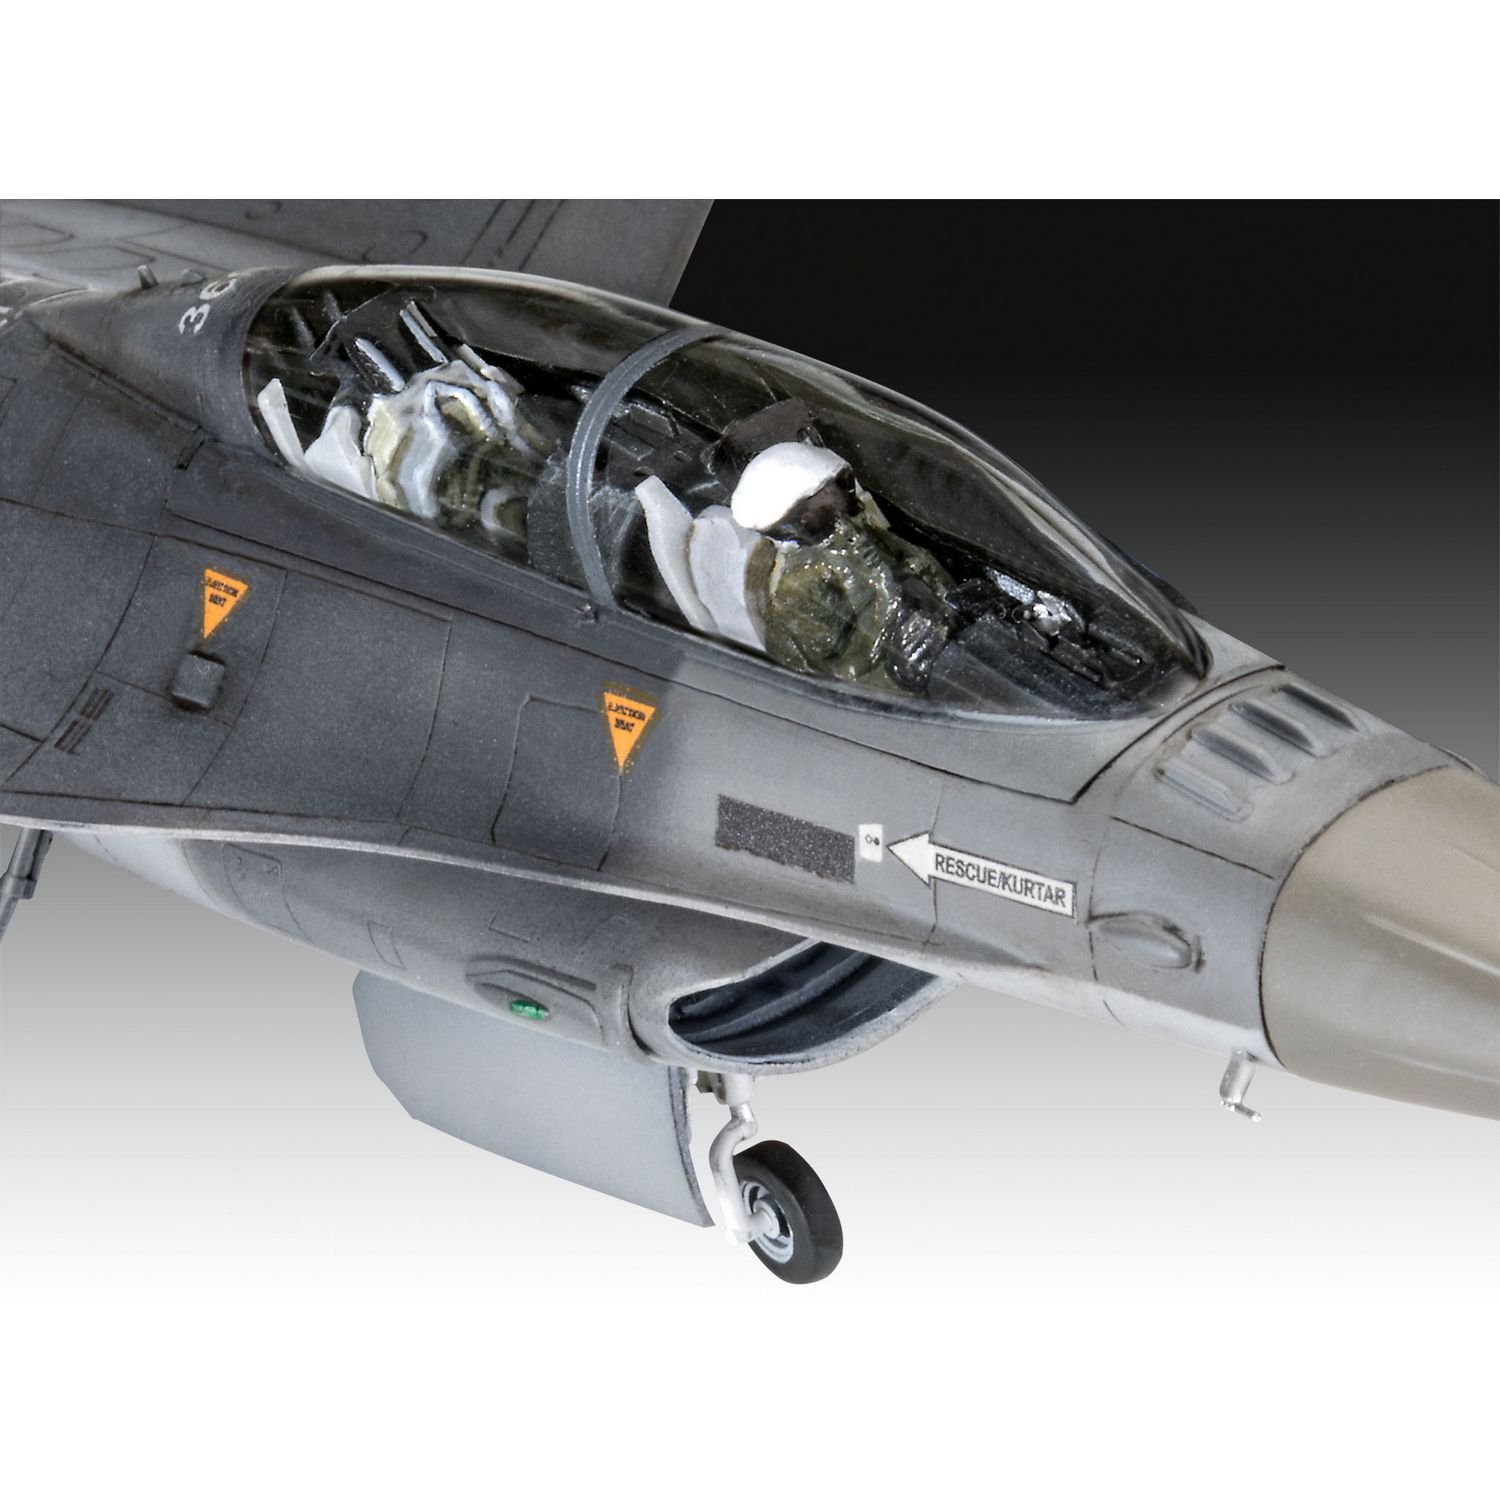 Збірна модель Revell Набір Літак F-16D Tigermeet 2014, рівень 4, масштаб 1:72, 130 деталей (RVL-63844) - фото 4